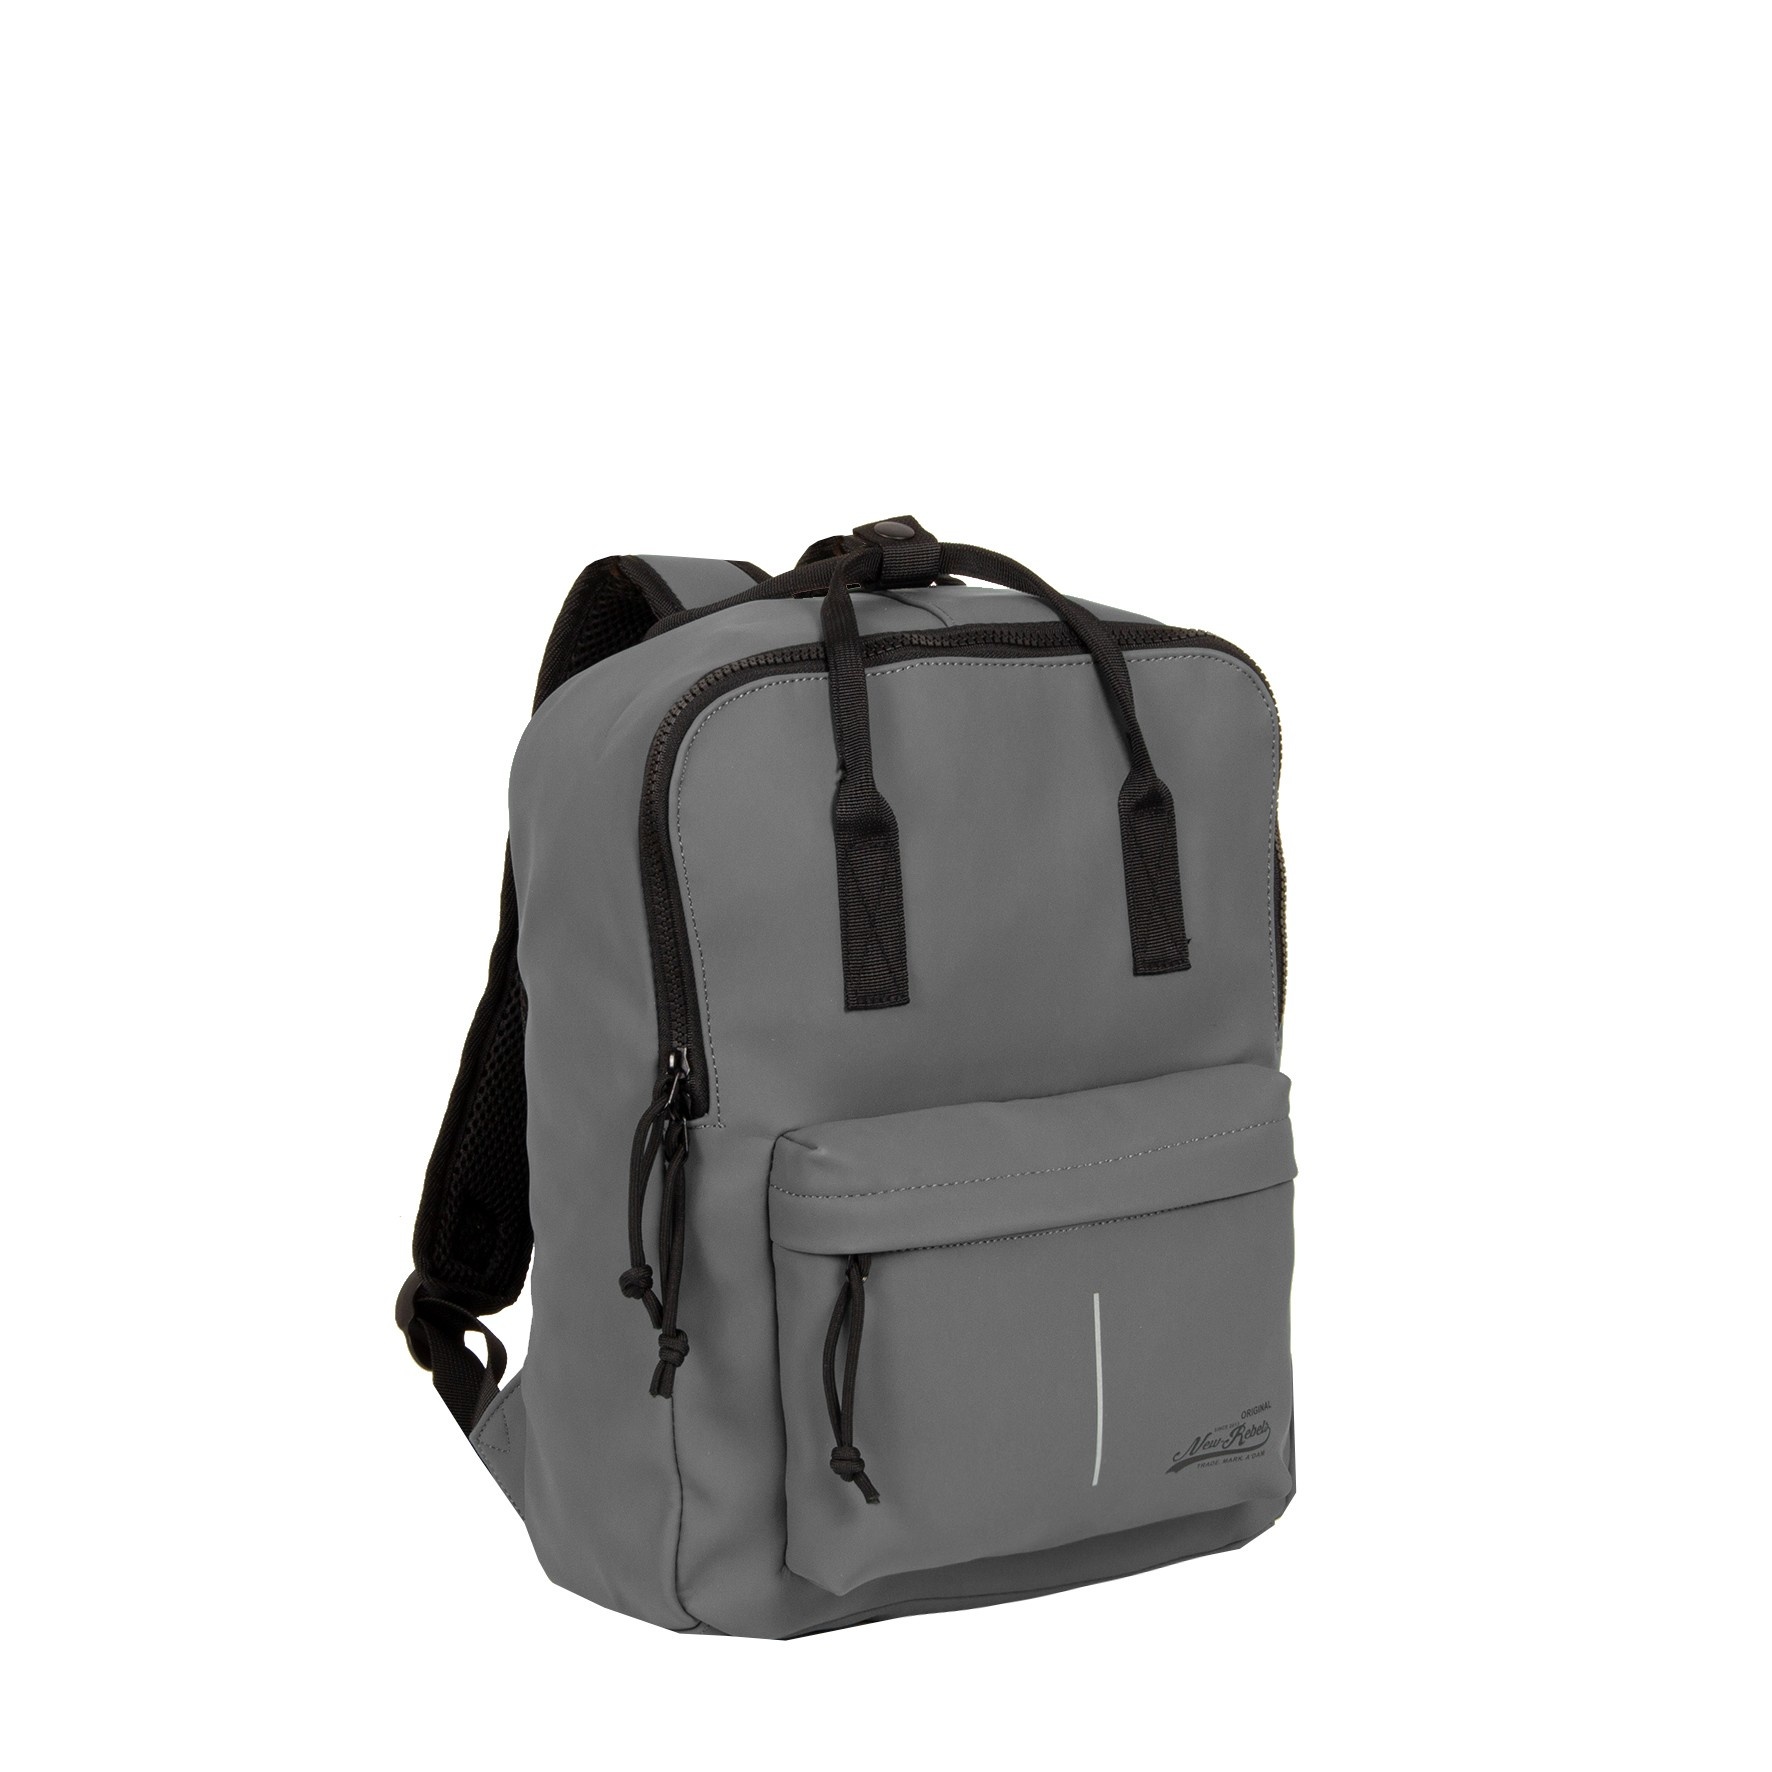 Backpack Tasche Dänisch Expertin Multifanshop® Rucksack schwarz 